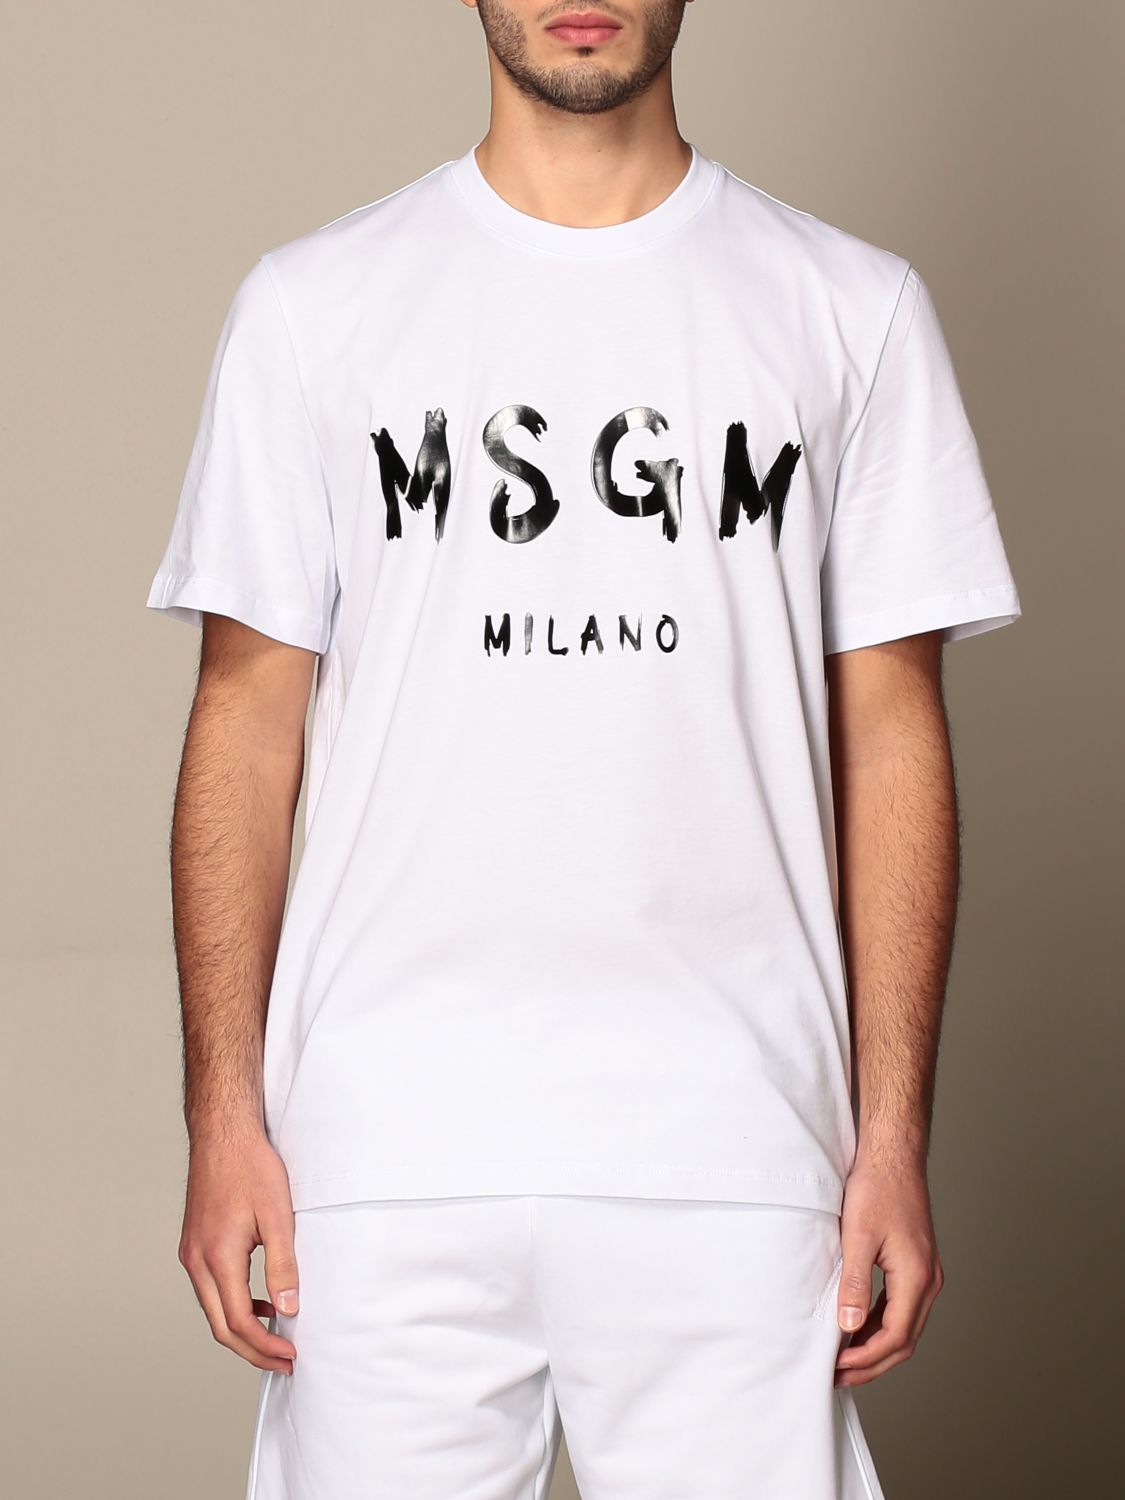 T-ShirtMSGM in Cotone da Uomo colore Bianco 37% di sconto Uomo T-shirt da T-shirt MSGM 